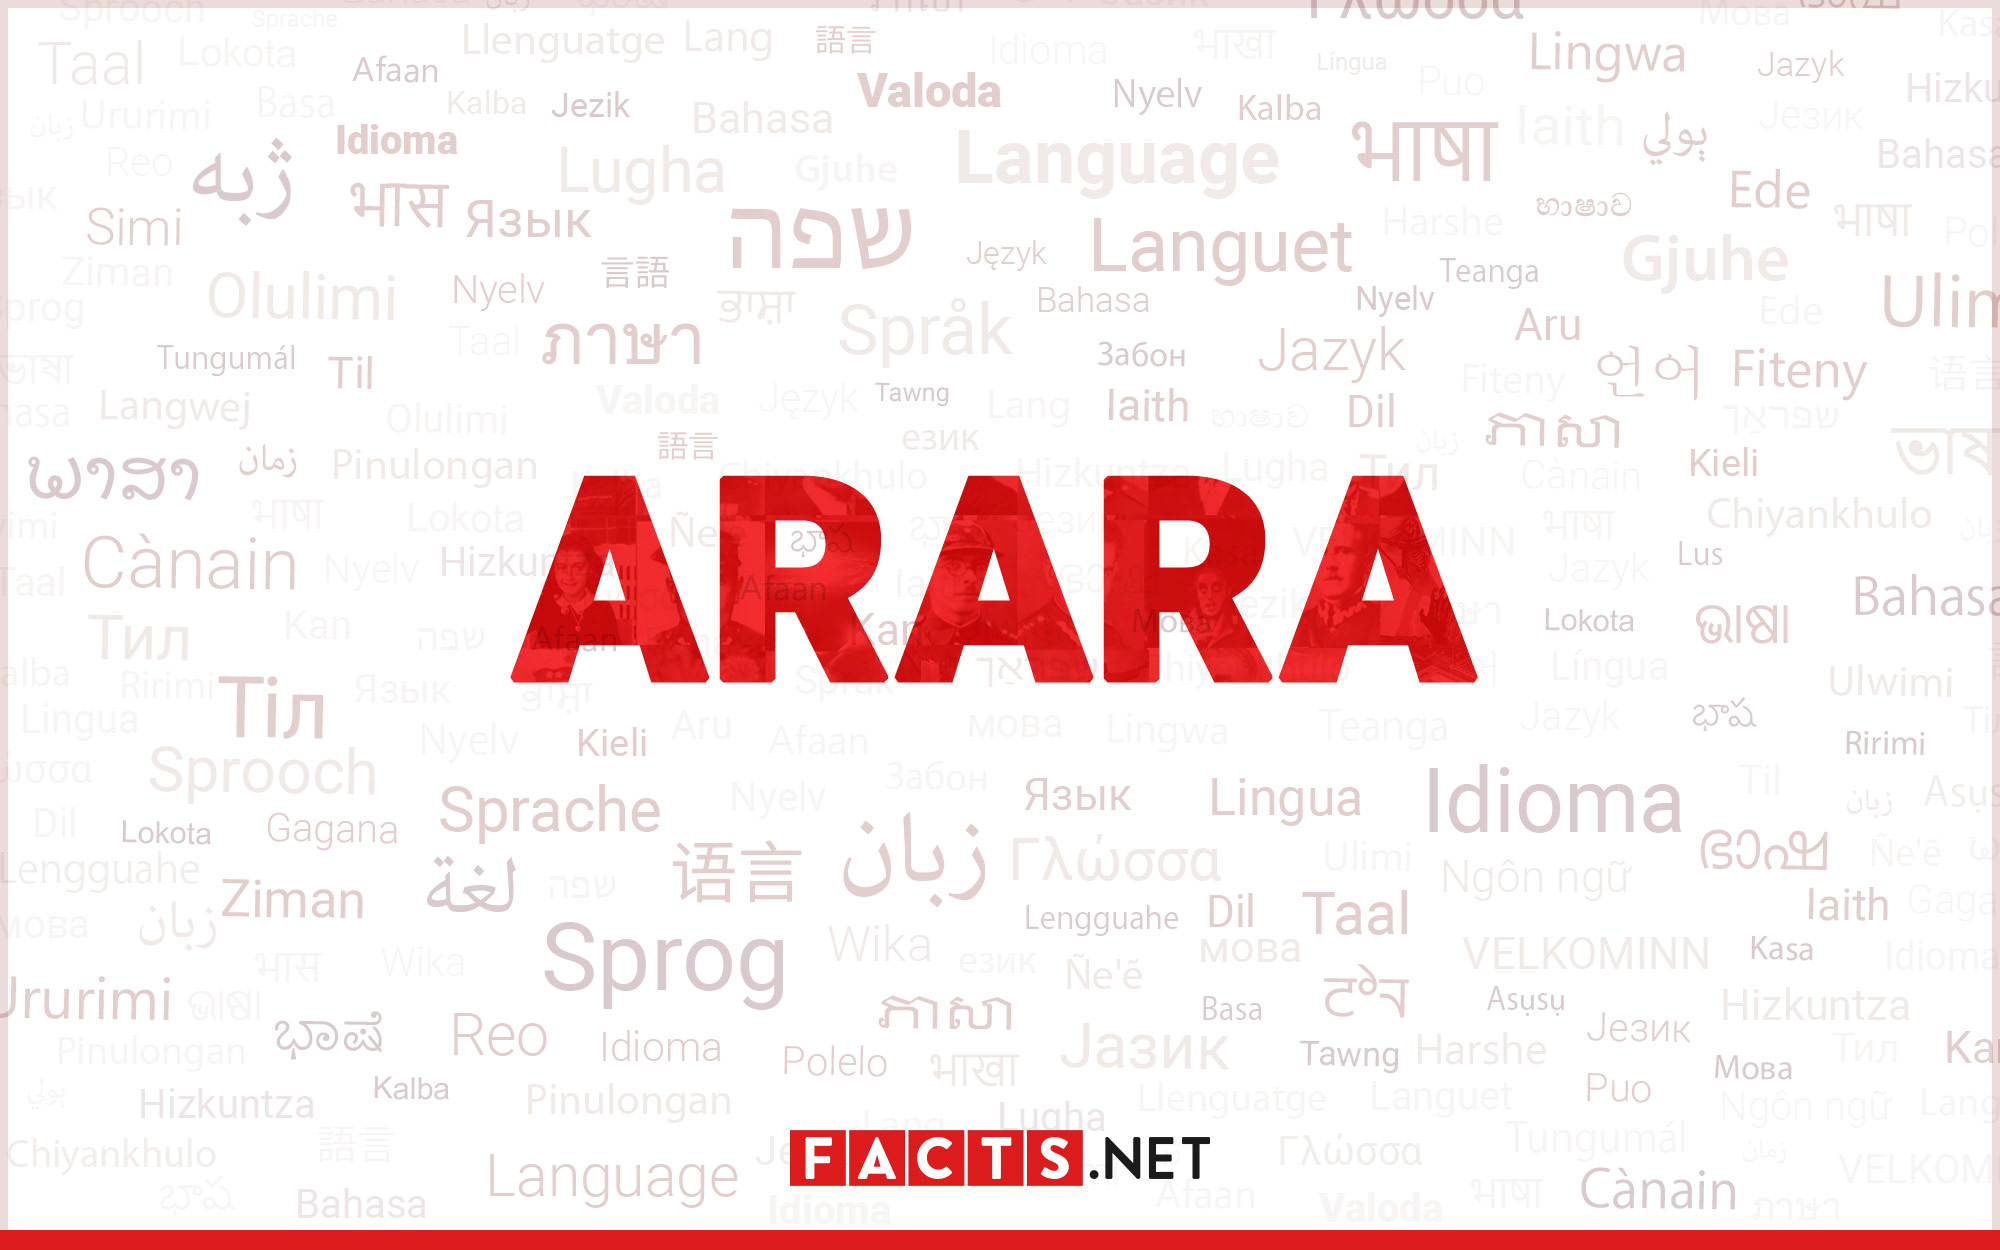 13-captivating-facts-about-arara